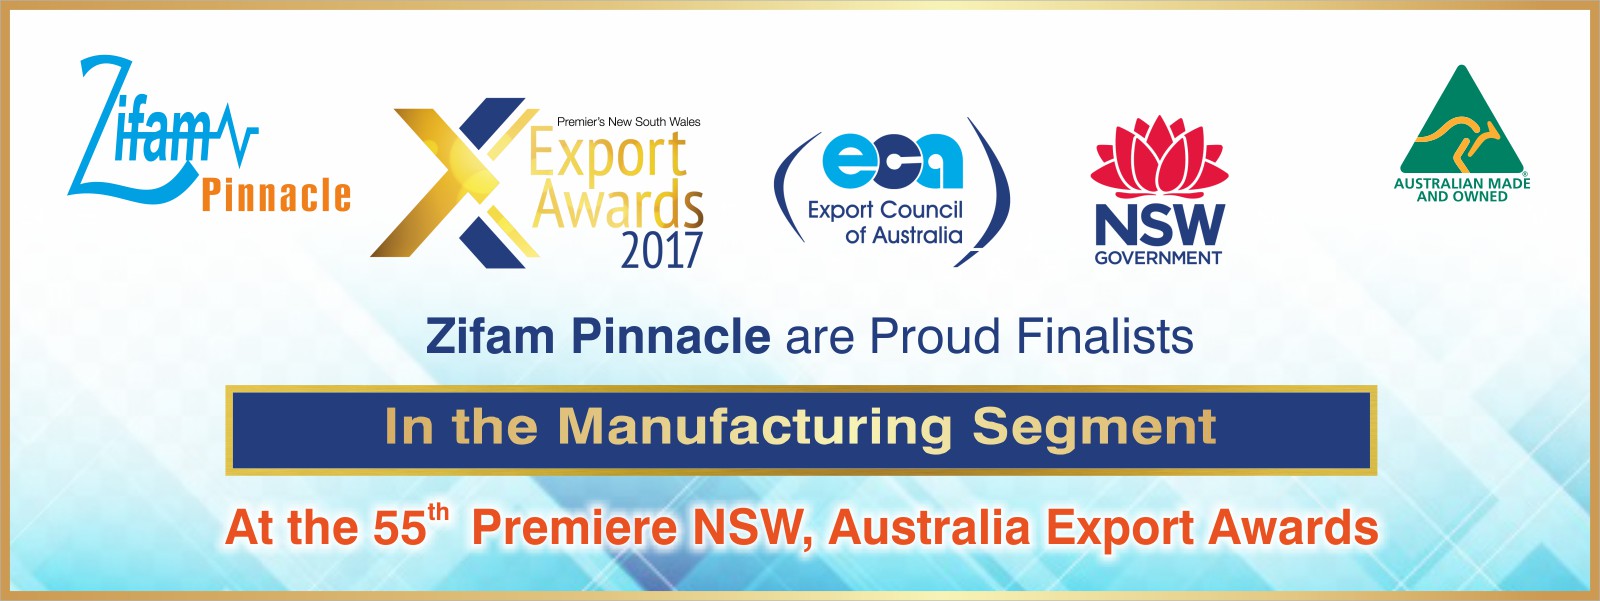 NSW-Export-Awards